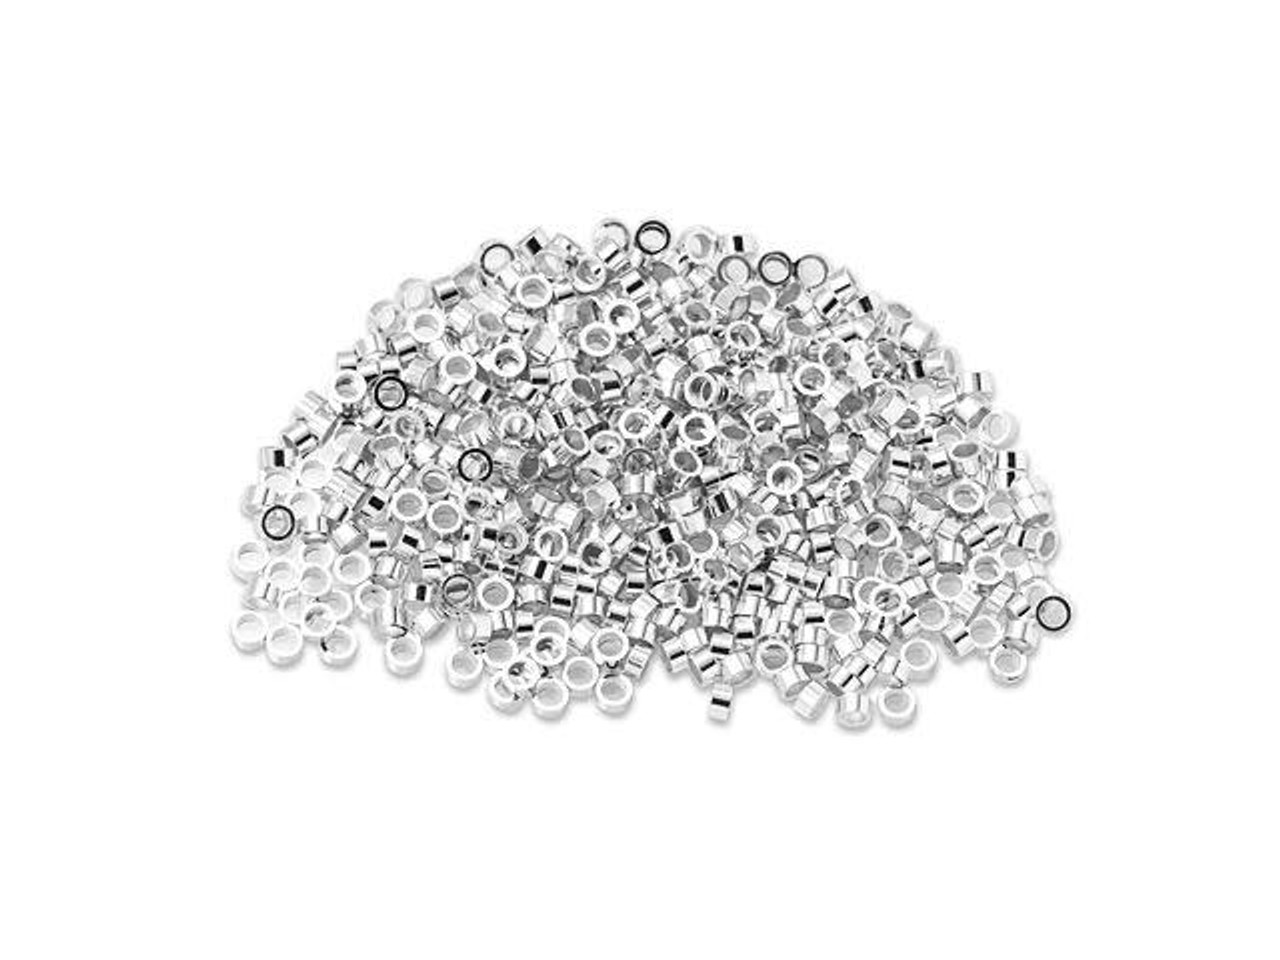 50 Pcs Bag of 2x2 mm Sterling Silver Crimp Beads